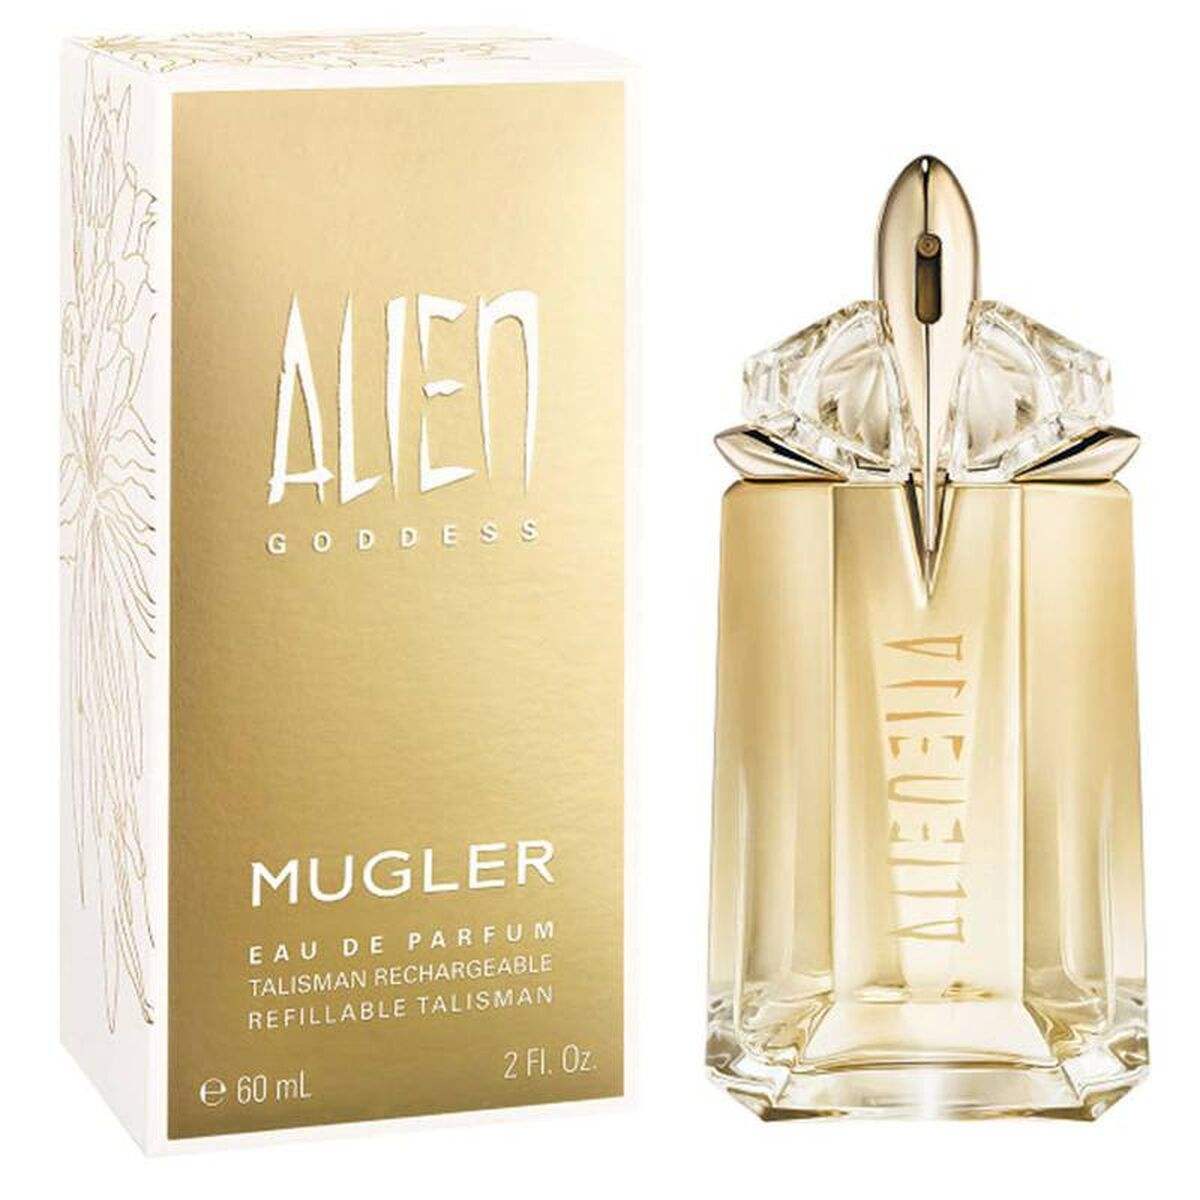 Parfum Homme Mugler Alien Goddess 60 ml 60 L - Mugler - Jardin D'Eyden - jardindeyden.fr